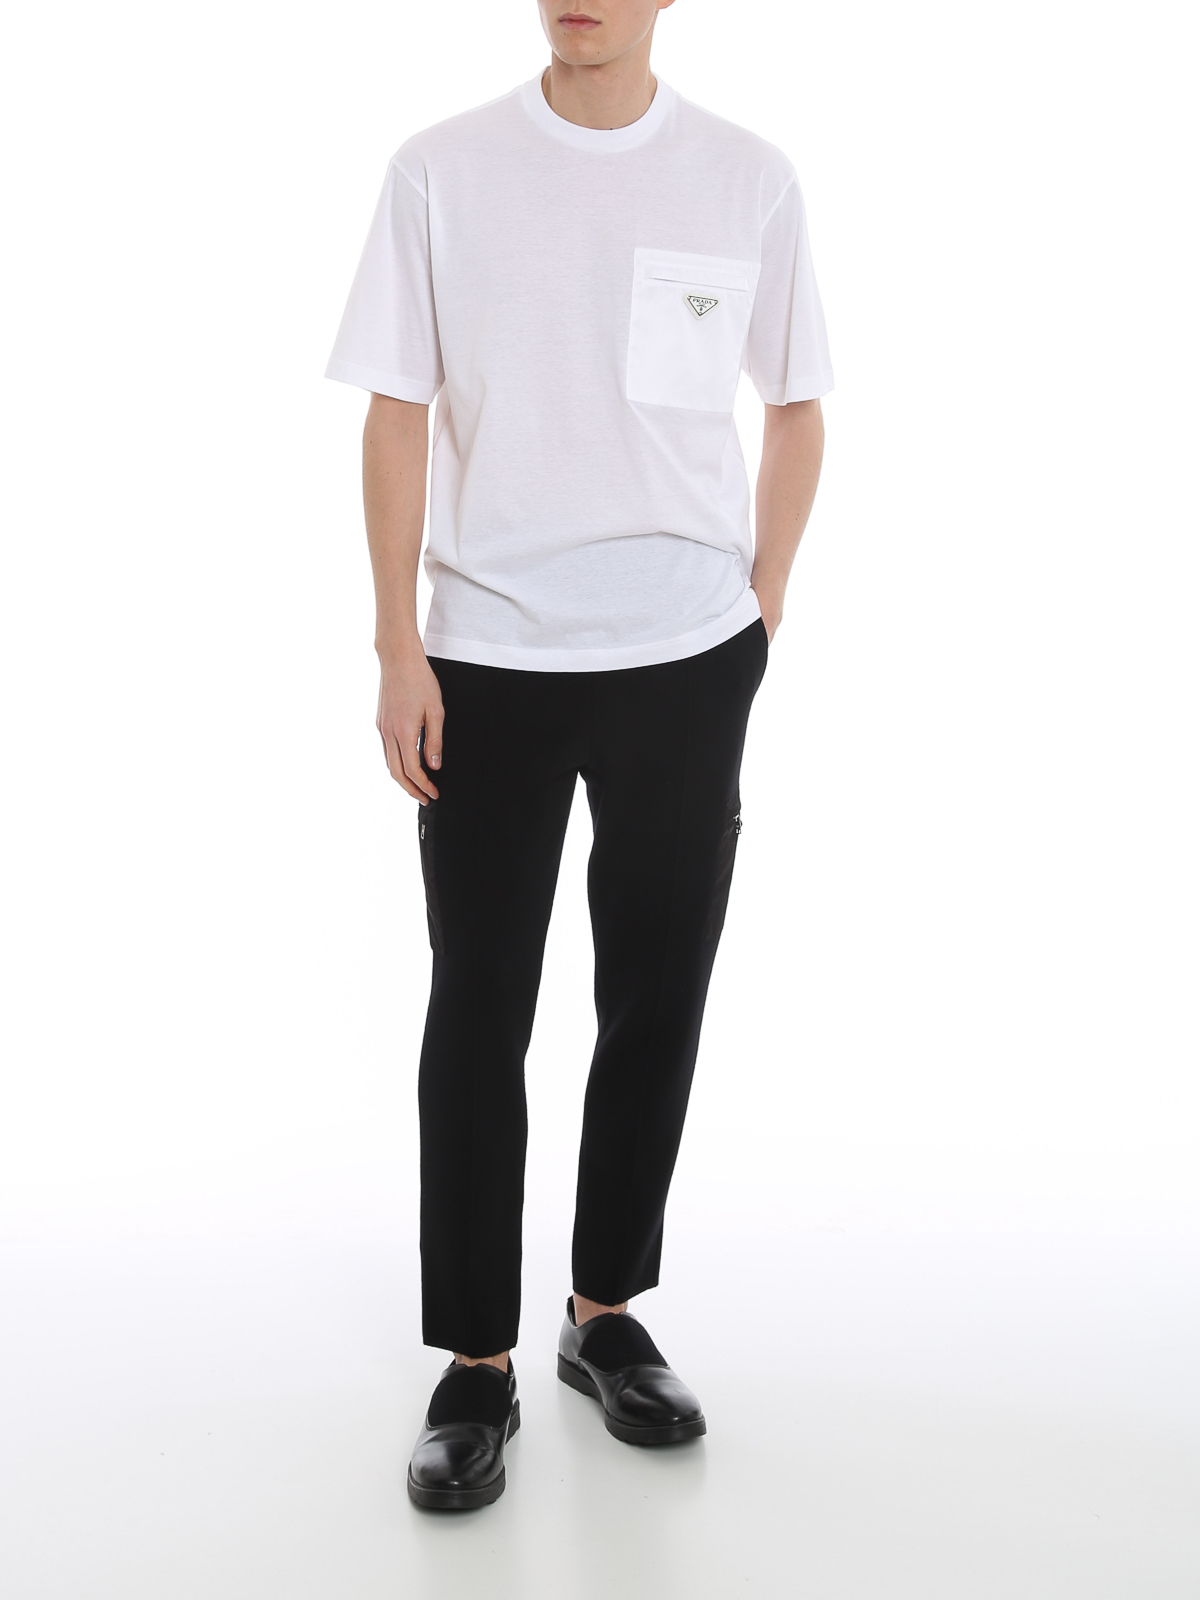 Tシャツ Prada - Tシャツ - 白 - UJN6611YFHF0009 | iKRIX shop online